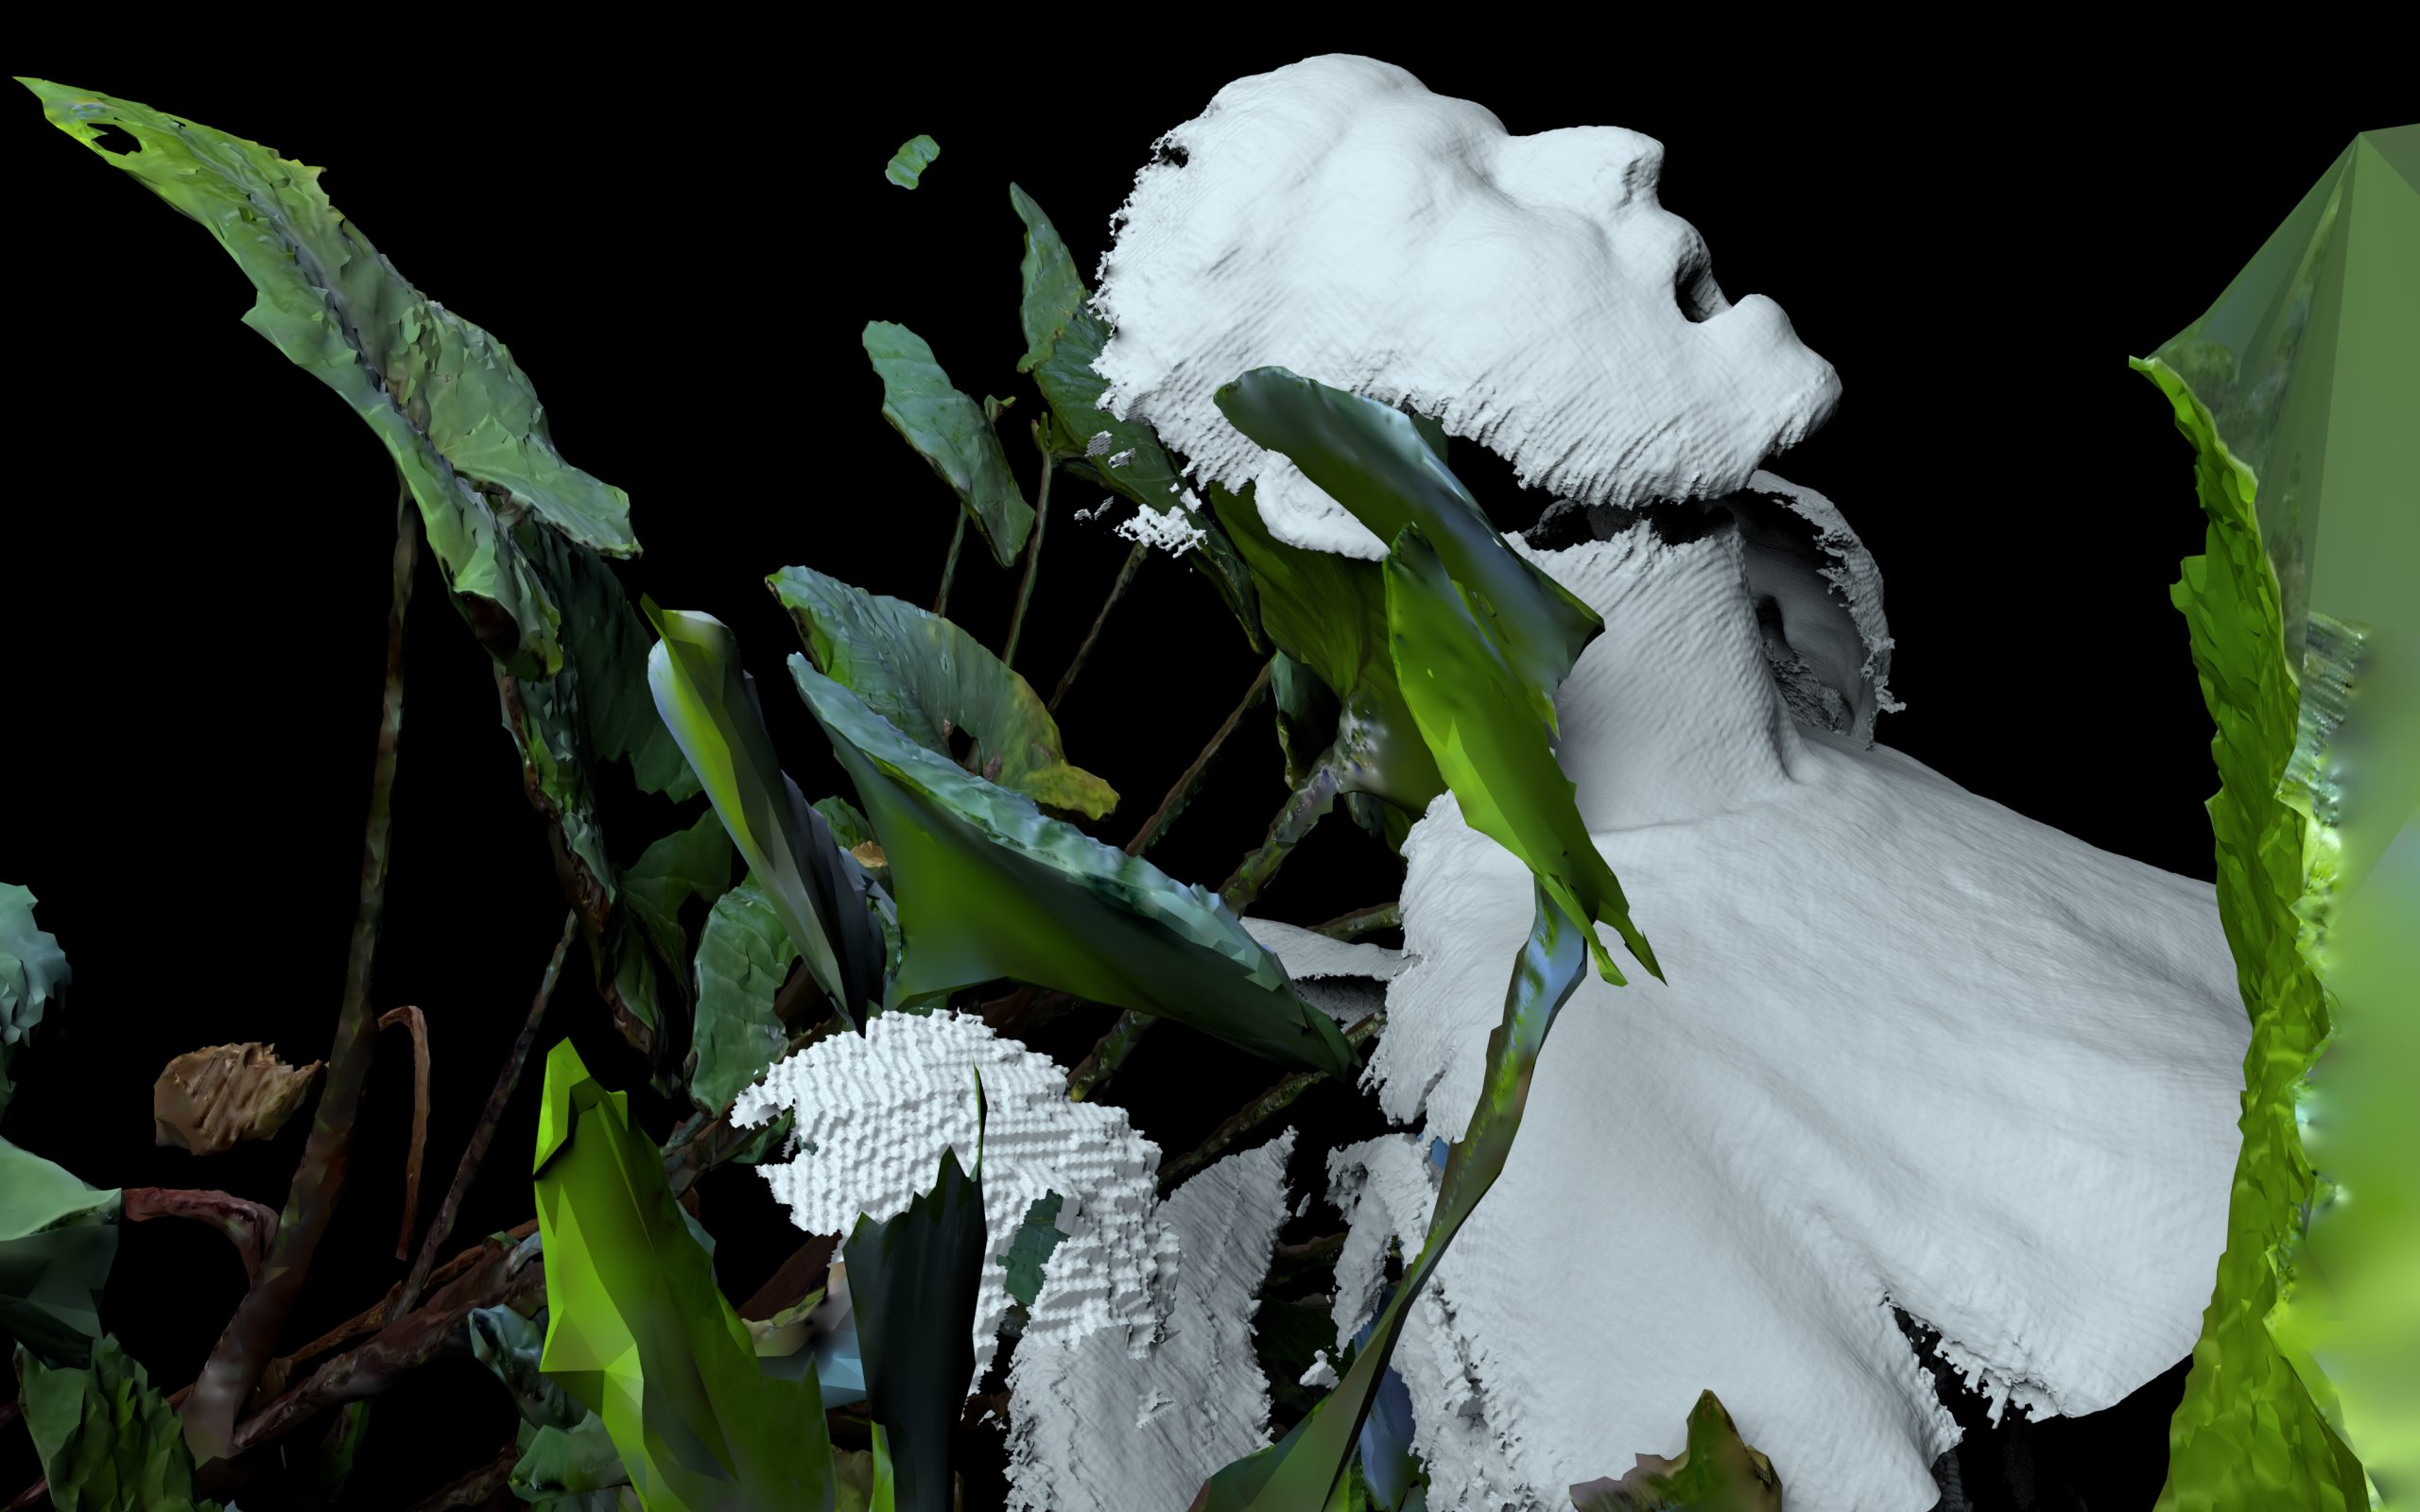 Yandell Walton, 3D rendered still imagery in development using photogrammetry, 2020. Image courtesy the artist.